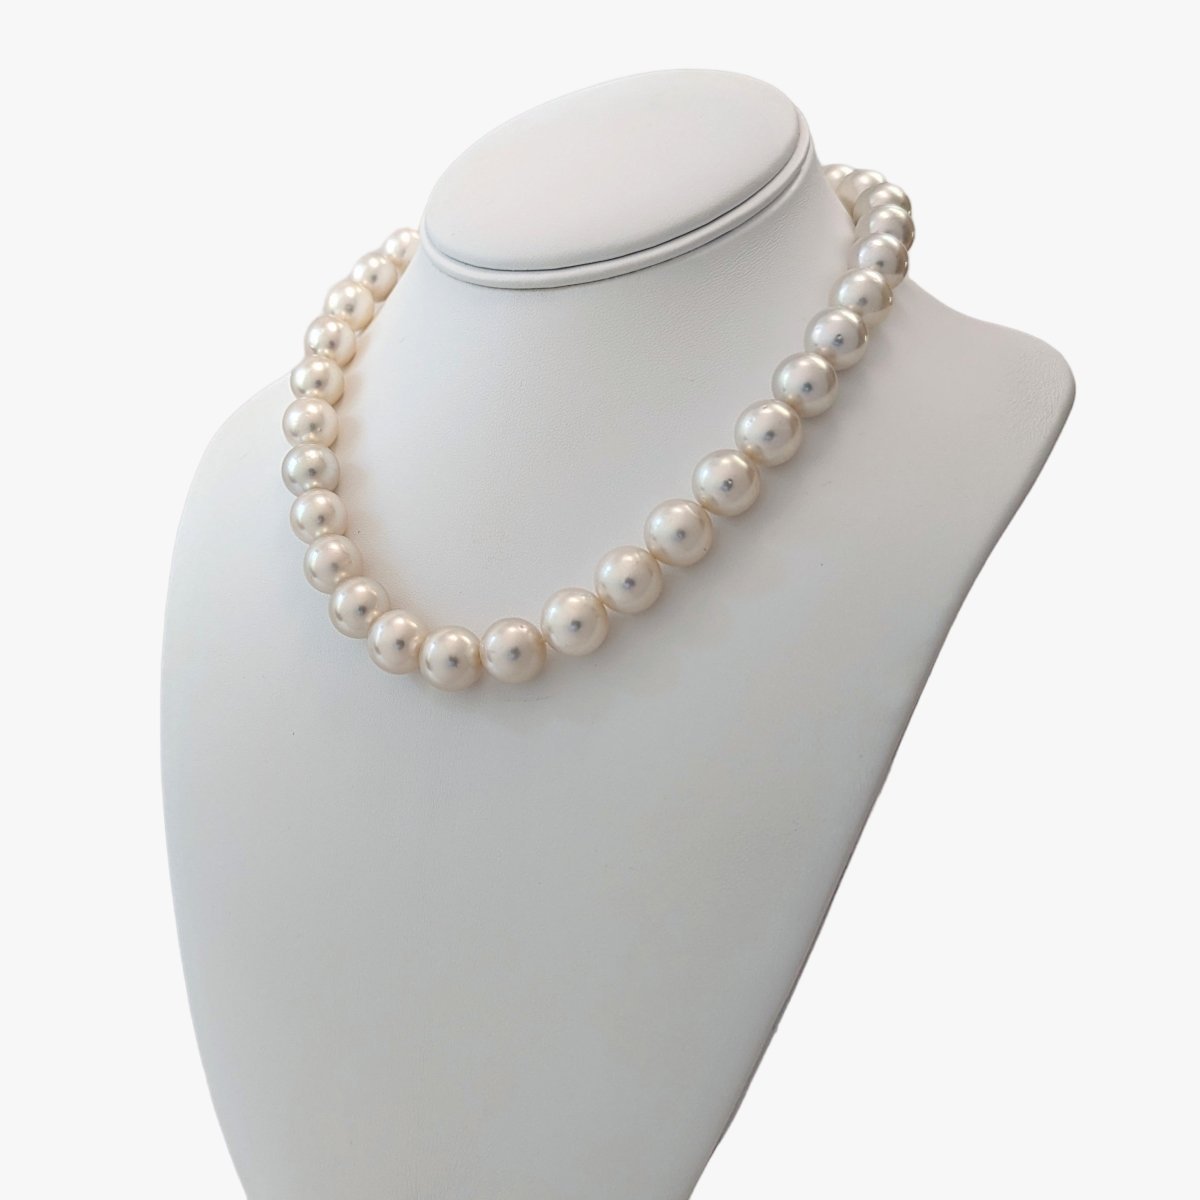 11-13mm White South Sea Pearl Necklace - Marina Korneev Fine Pearls